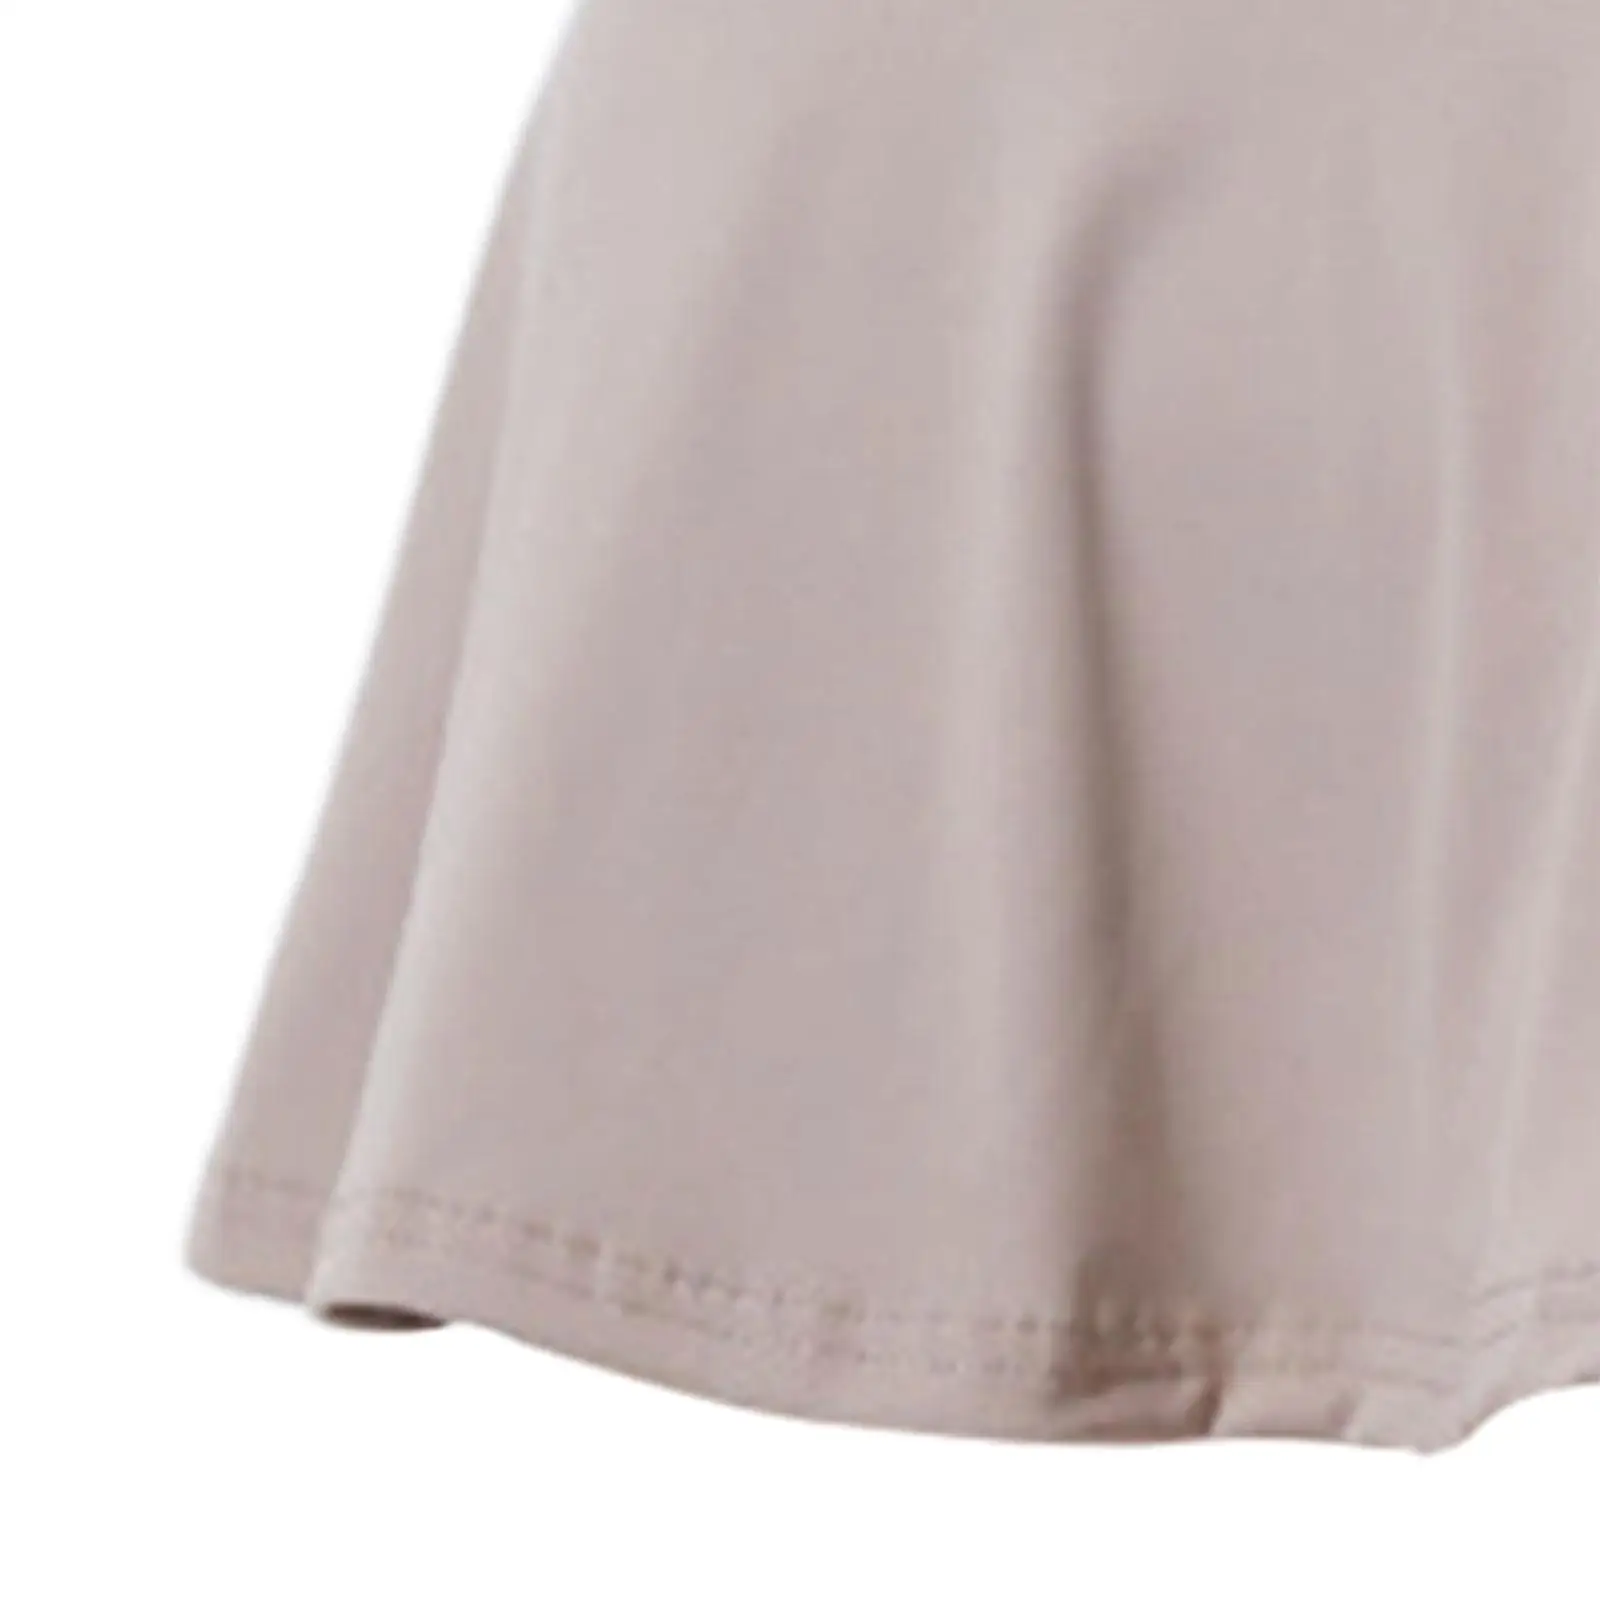 Tennis Skirts Short Skirts Soft Activewear Casual Mini Skirt Gymwear Golf Skorts Skirt for Running Home Fitness Jogging Exercise